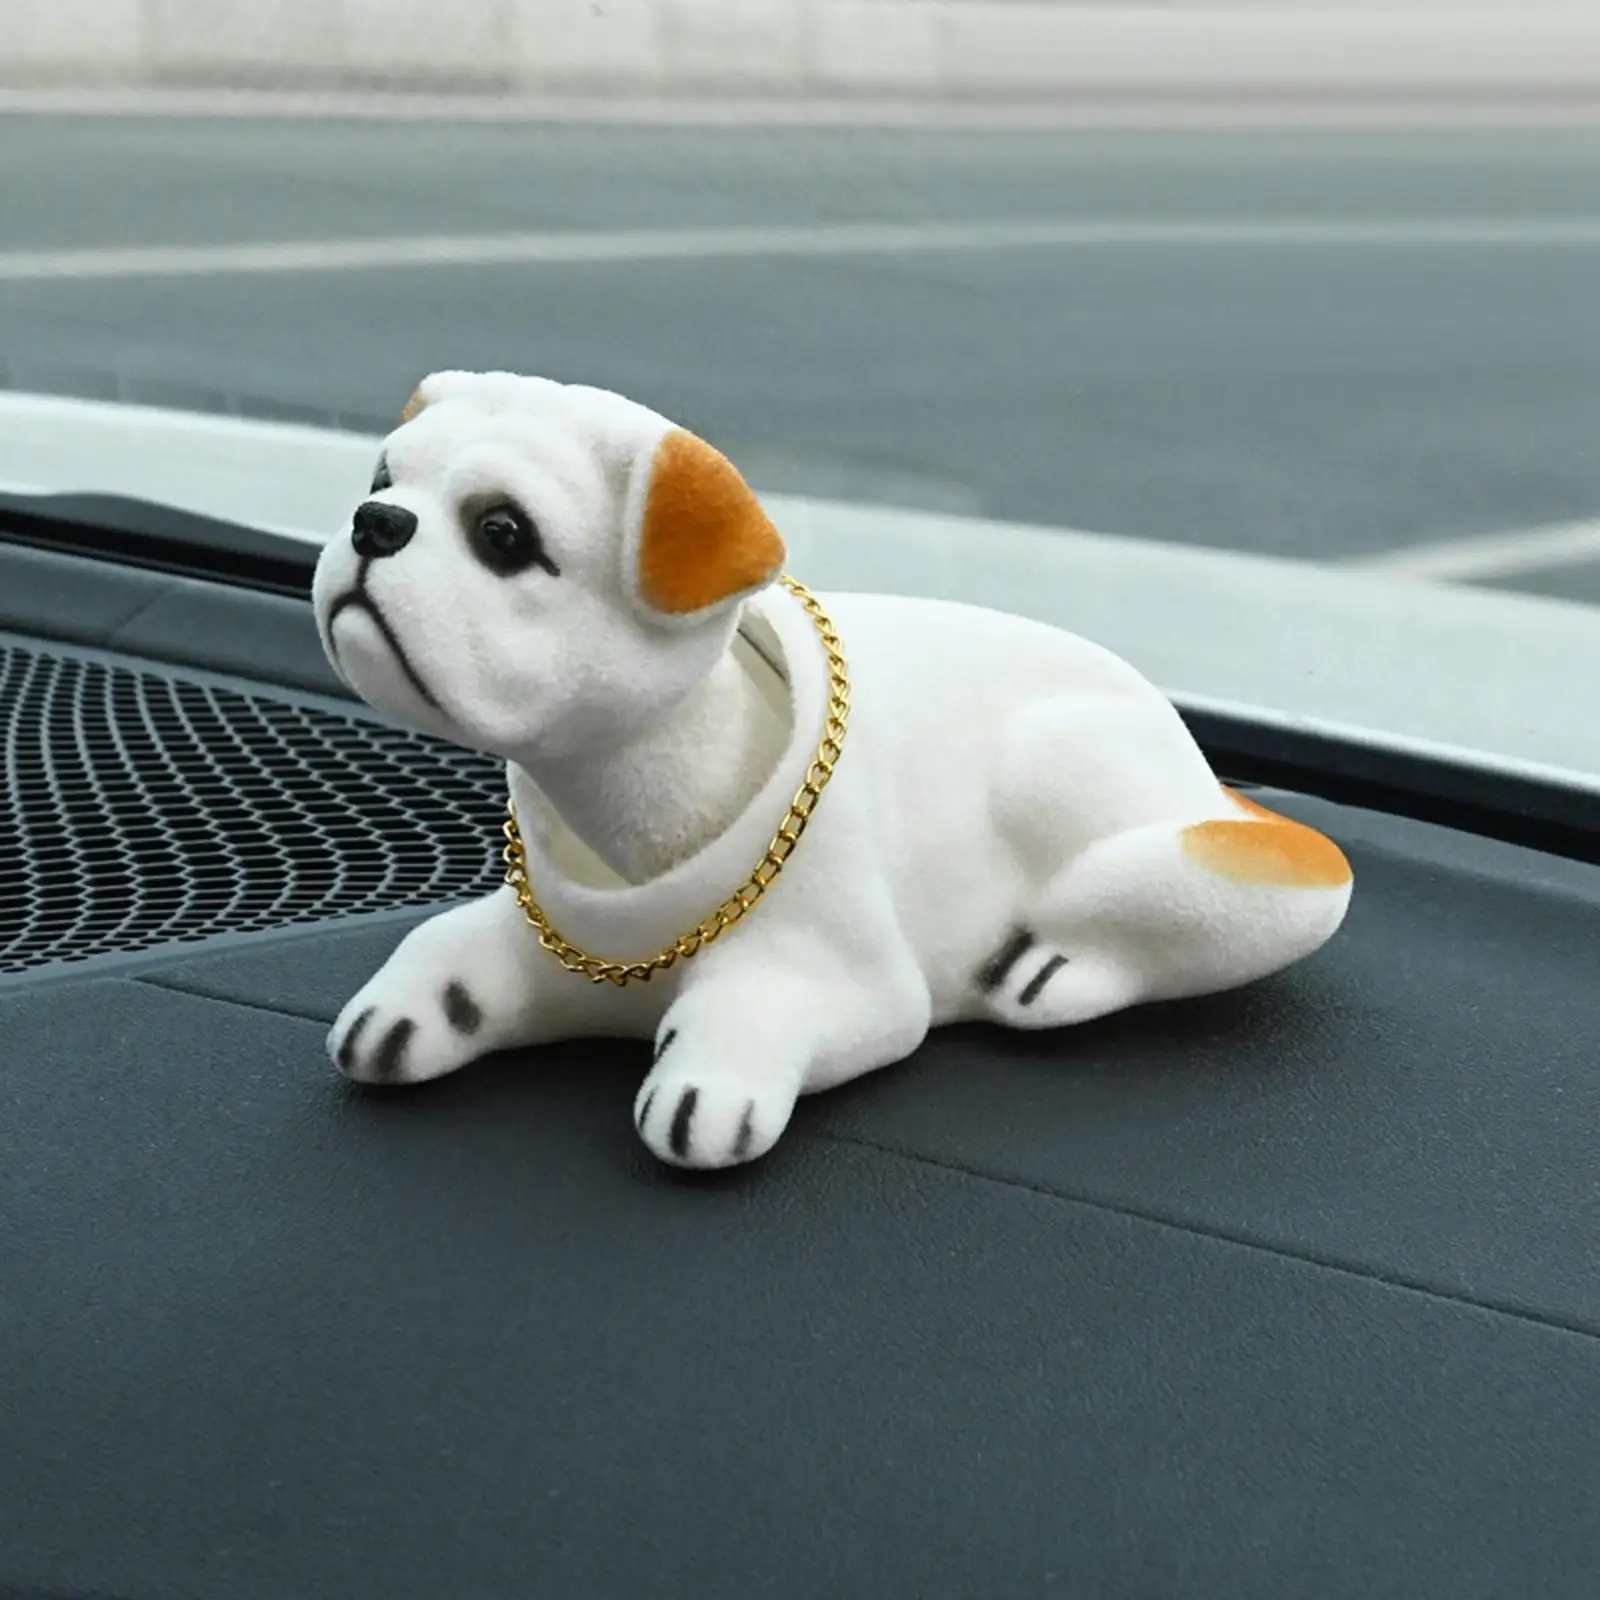 Dashboard Head Dogs Nodding Heads Car Dashboard Ornaments Puppy for Car Vehicle Interior Decoration